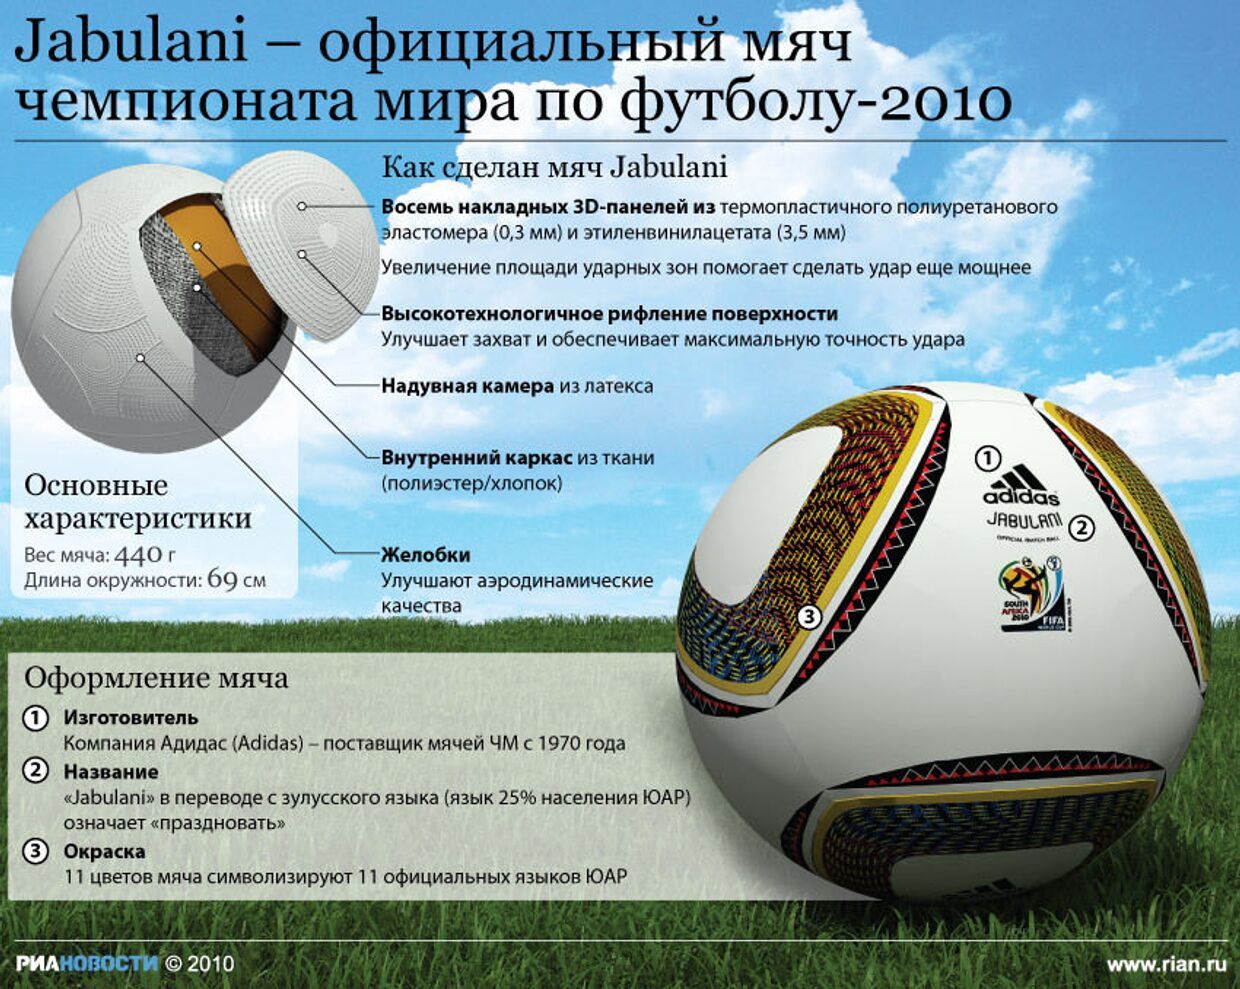 Jabulani – официальный мяч чемпионата мира по футболу-2010